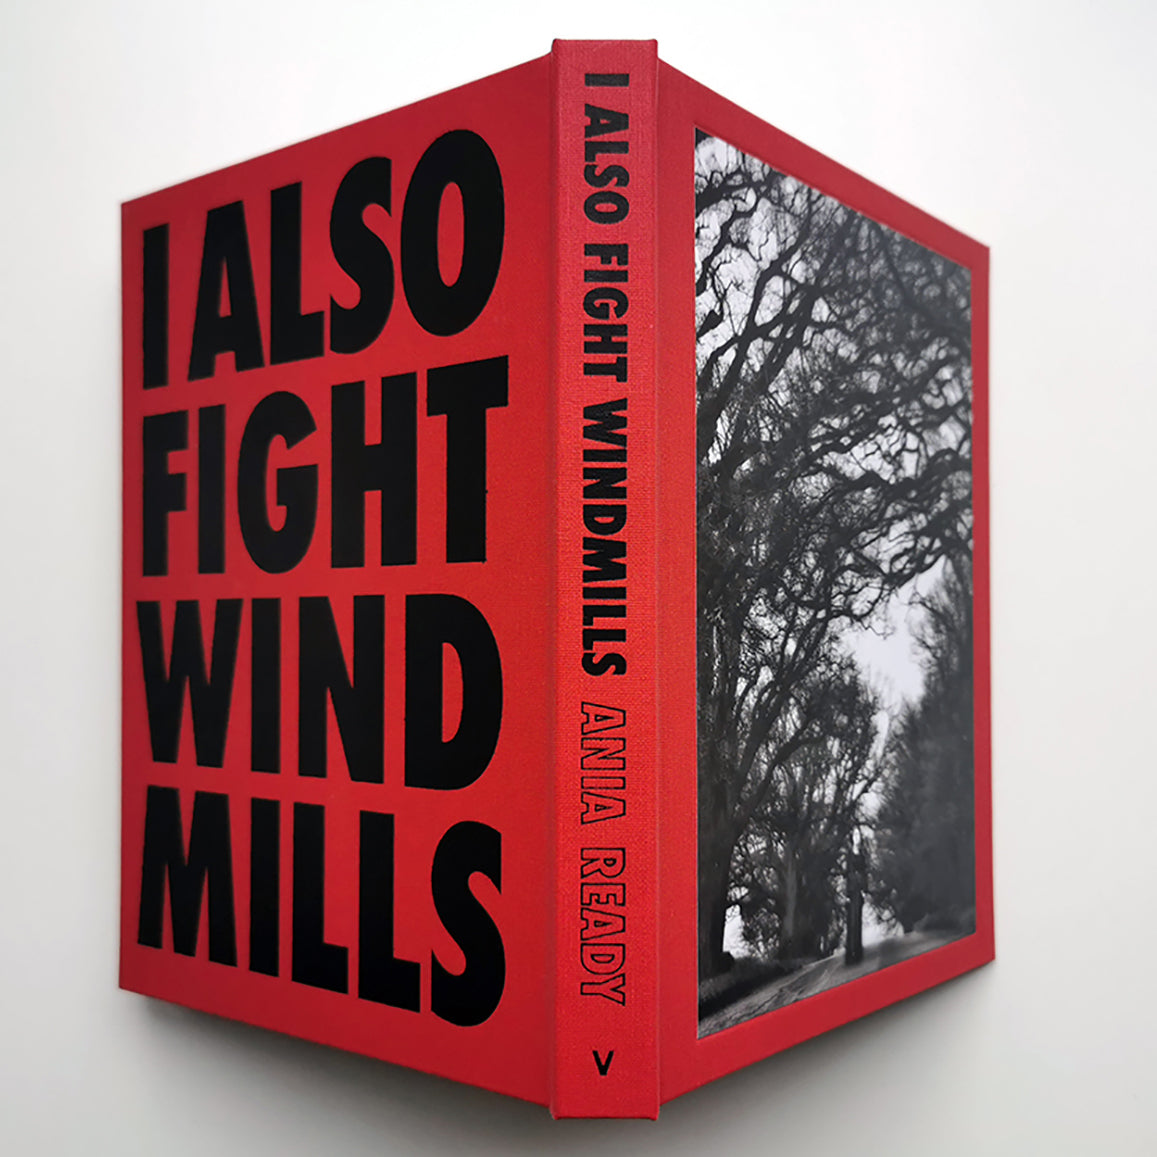 I ALSO FIGHT WINDMILLS A Literary Photobook by Ania Ready